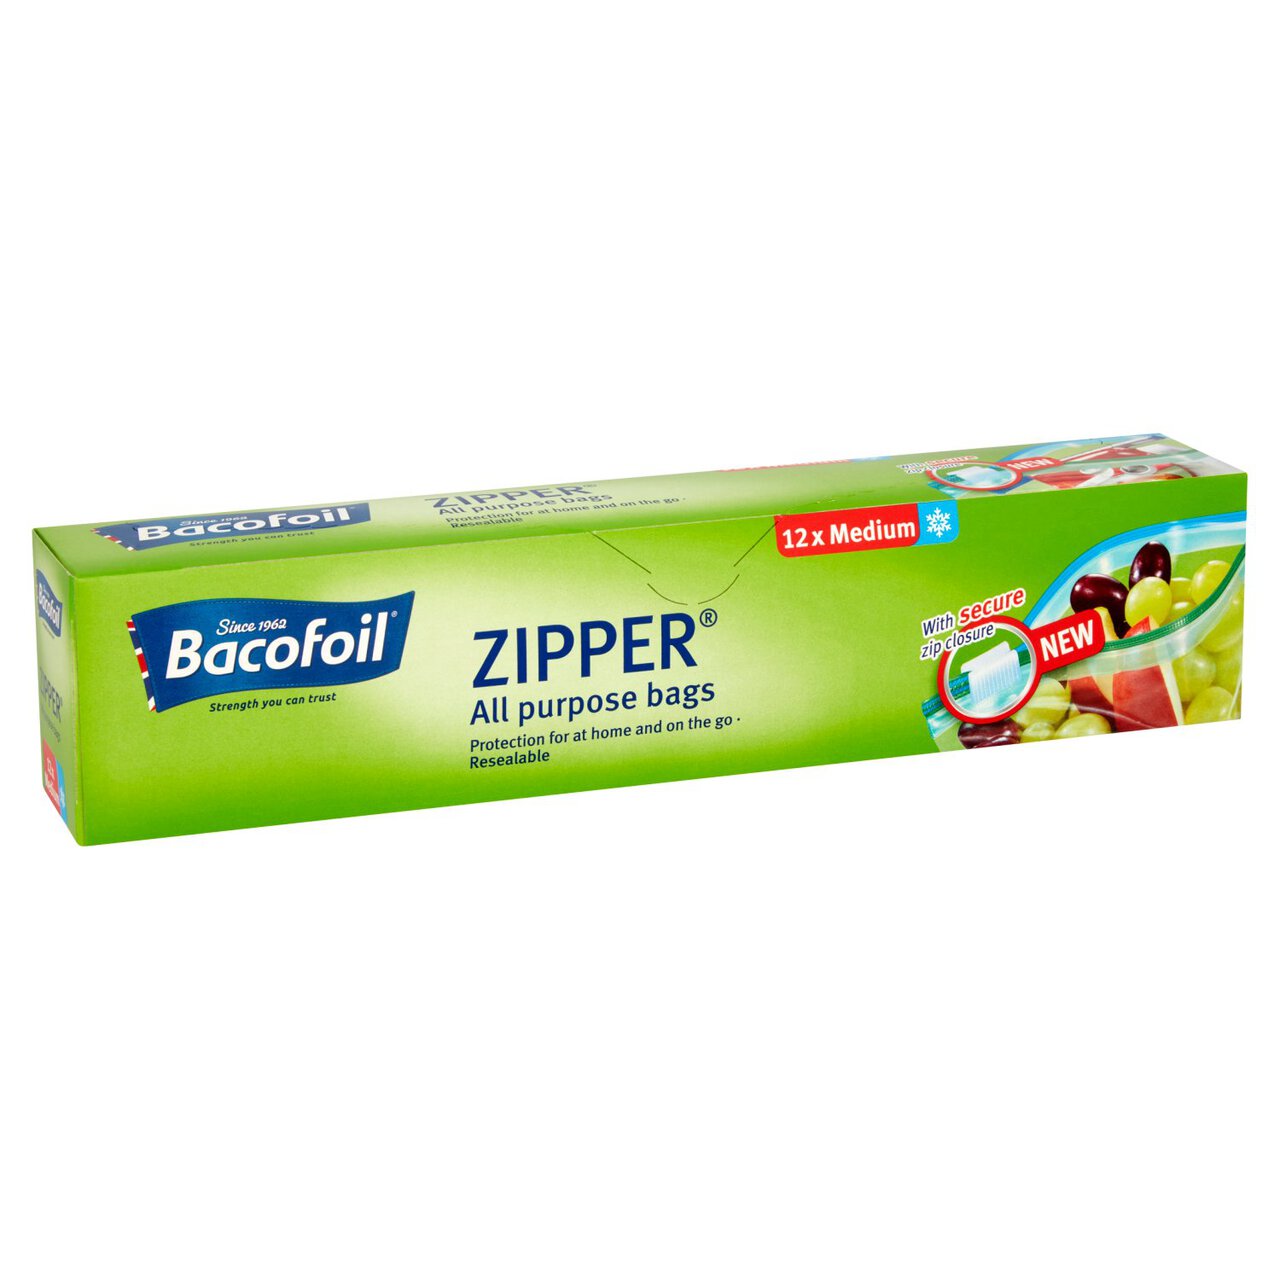 Bacofoil Medium Zipper All Purpose Bags 12 per pack